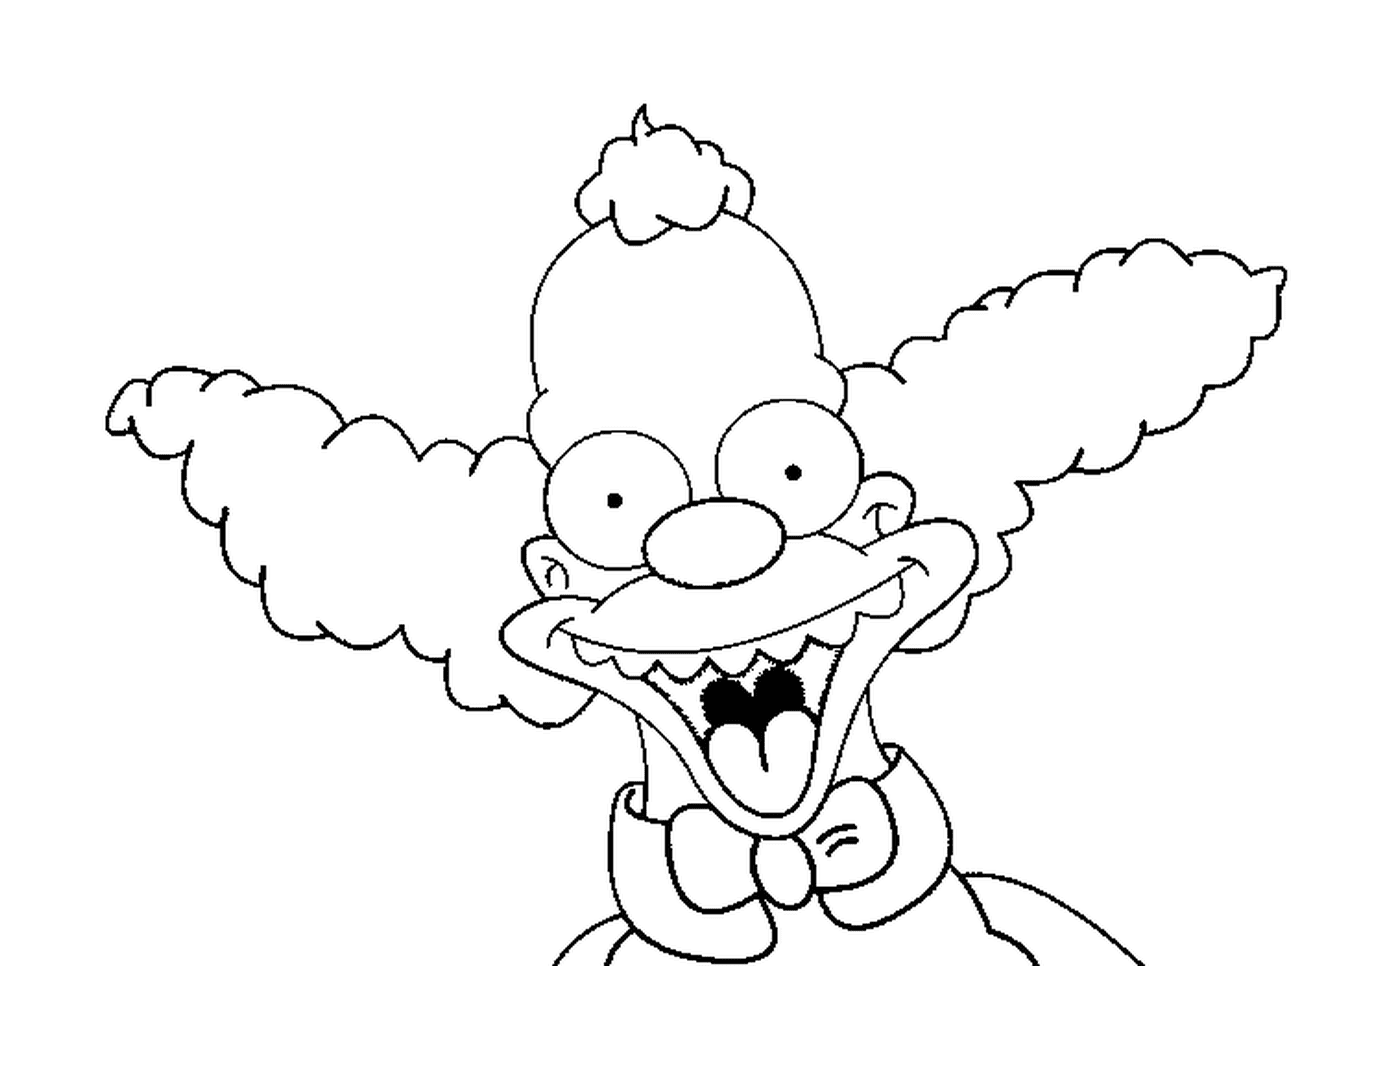  Krusty ri de Simpson 